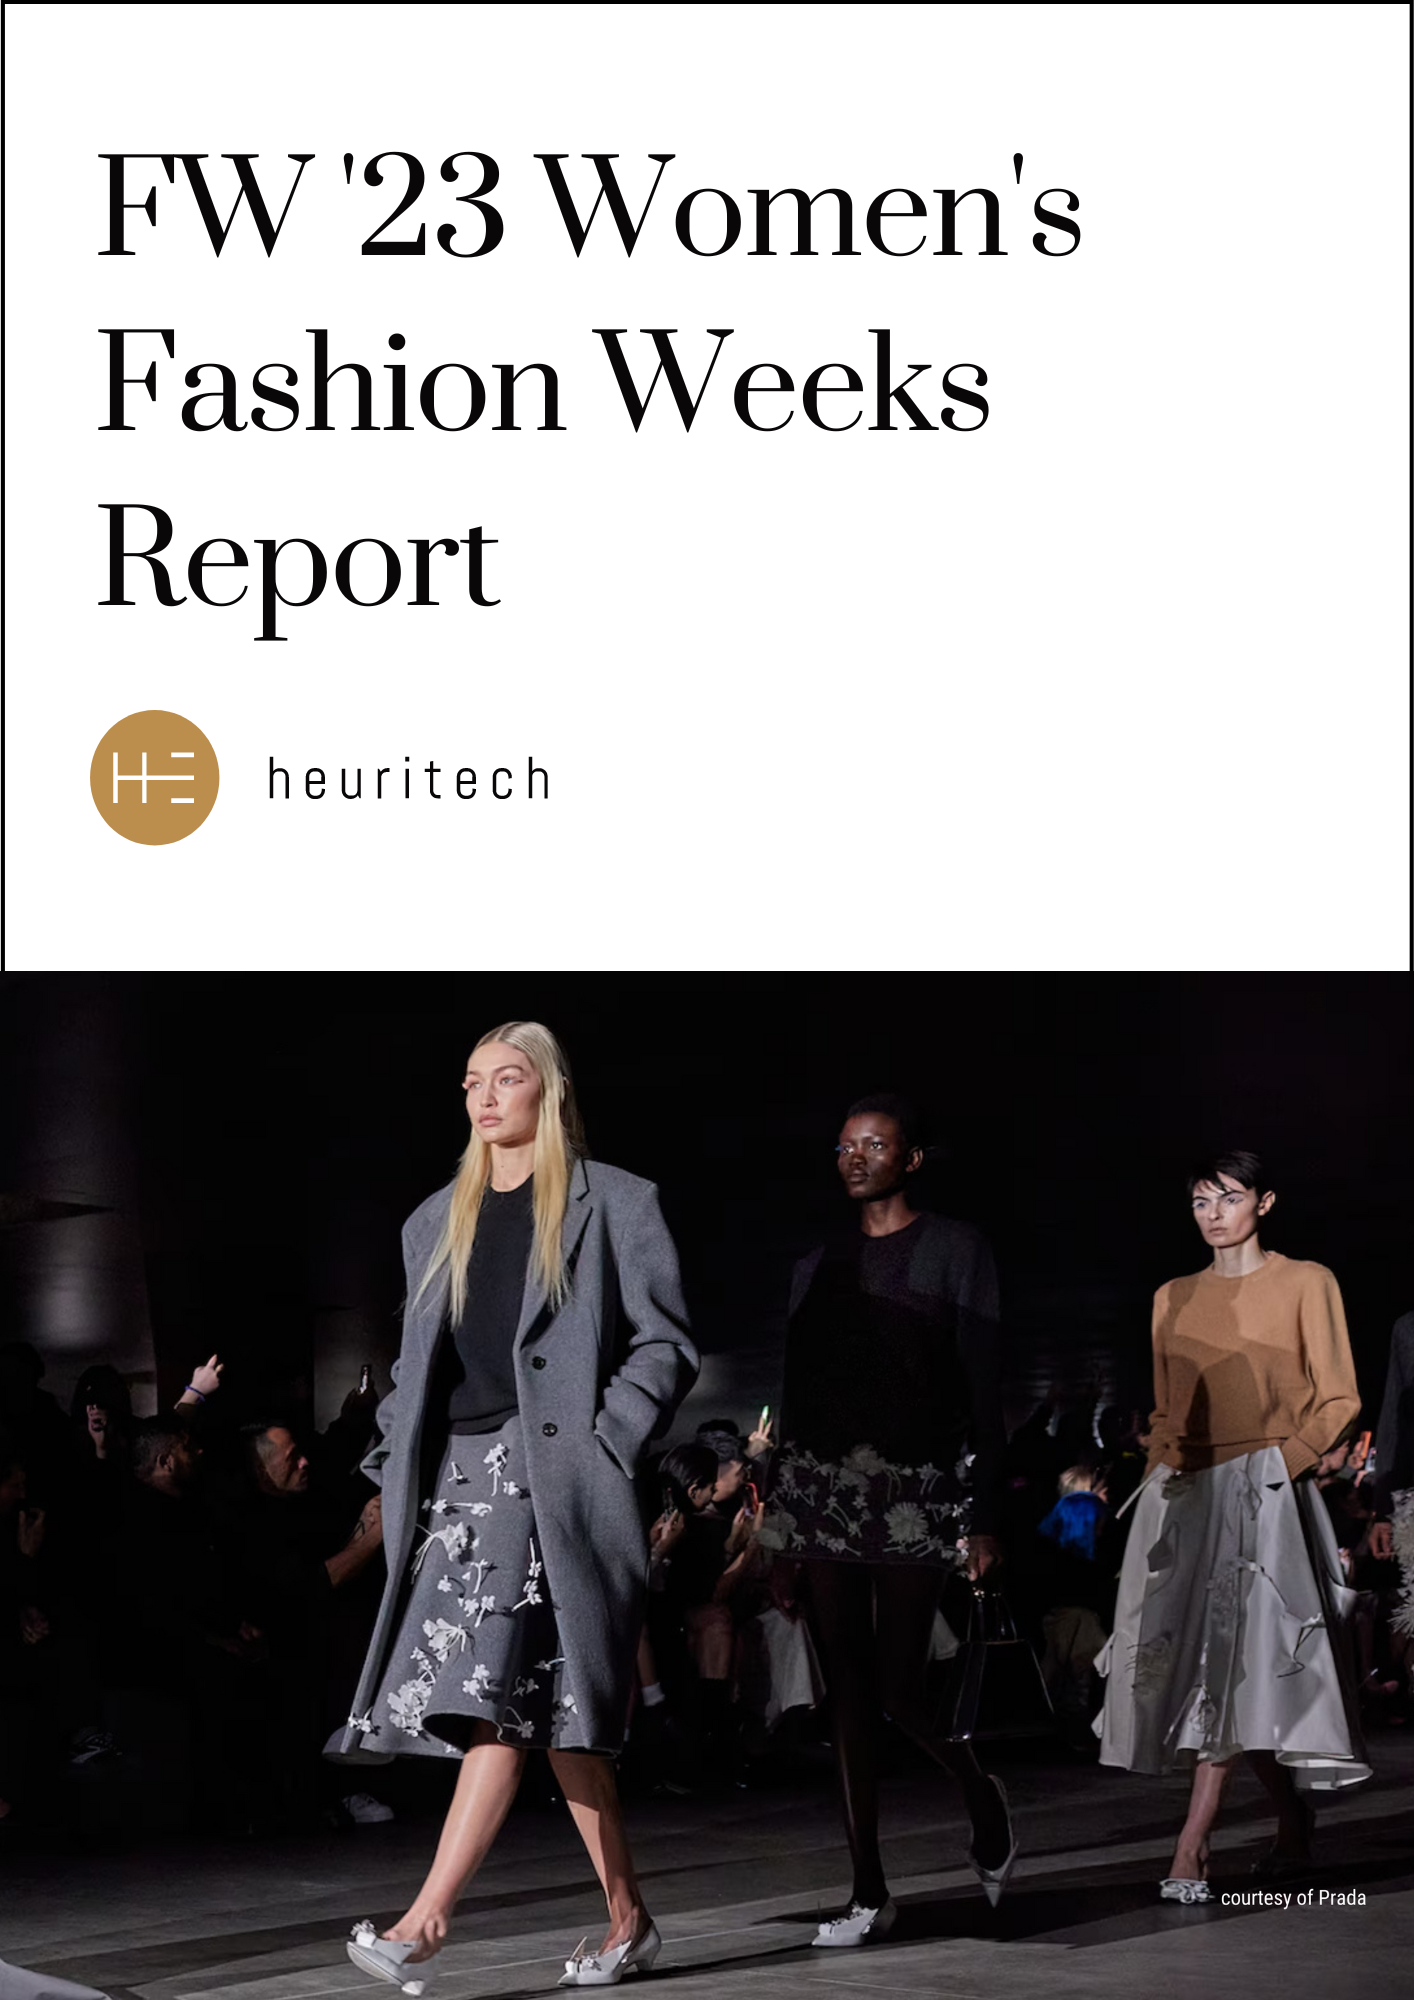 FW '23 Women's Fashion Weeks Report